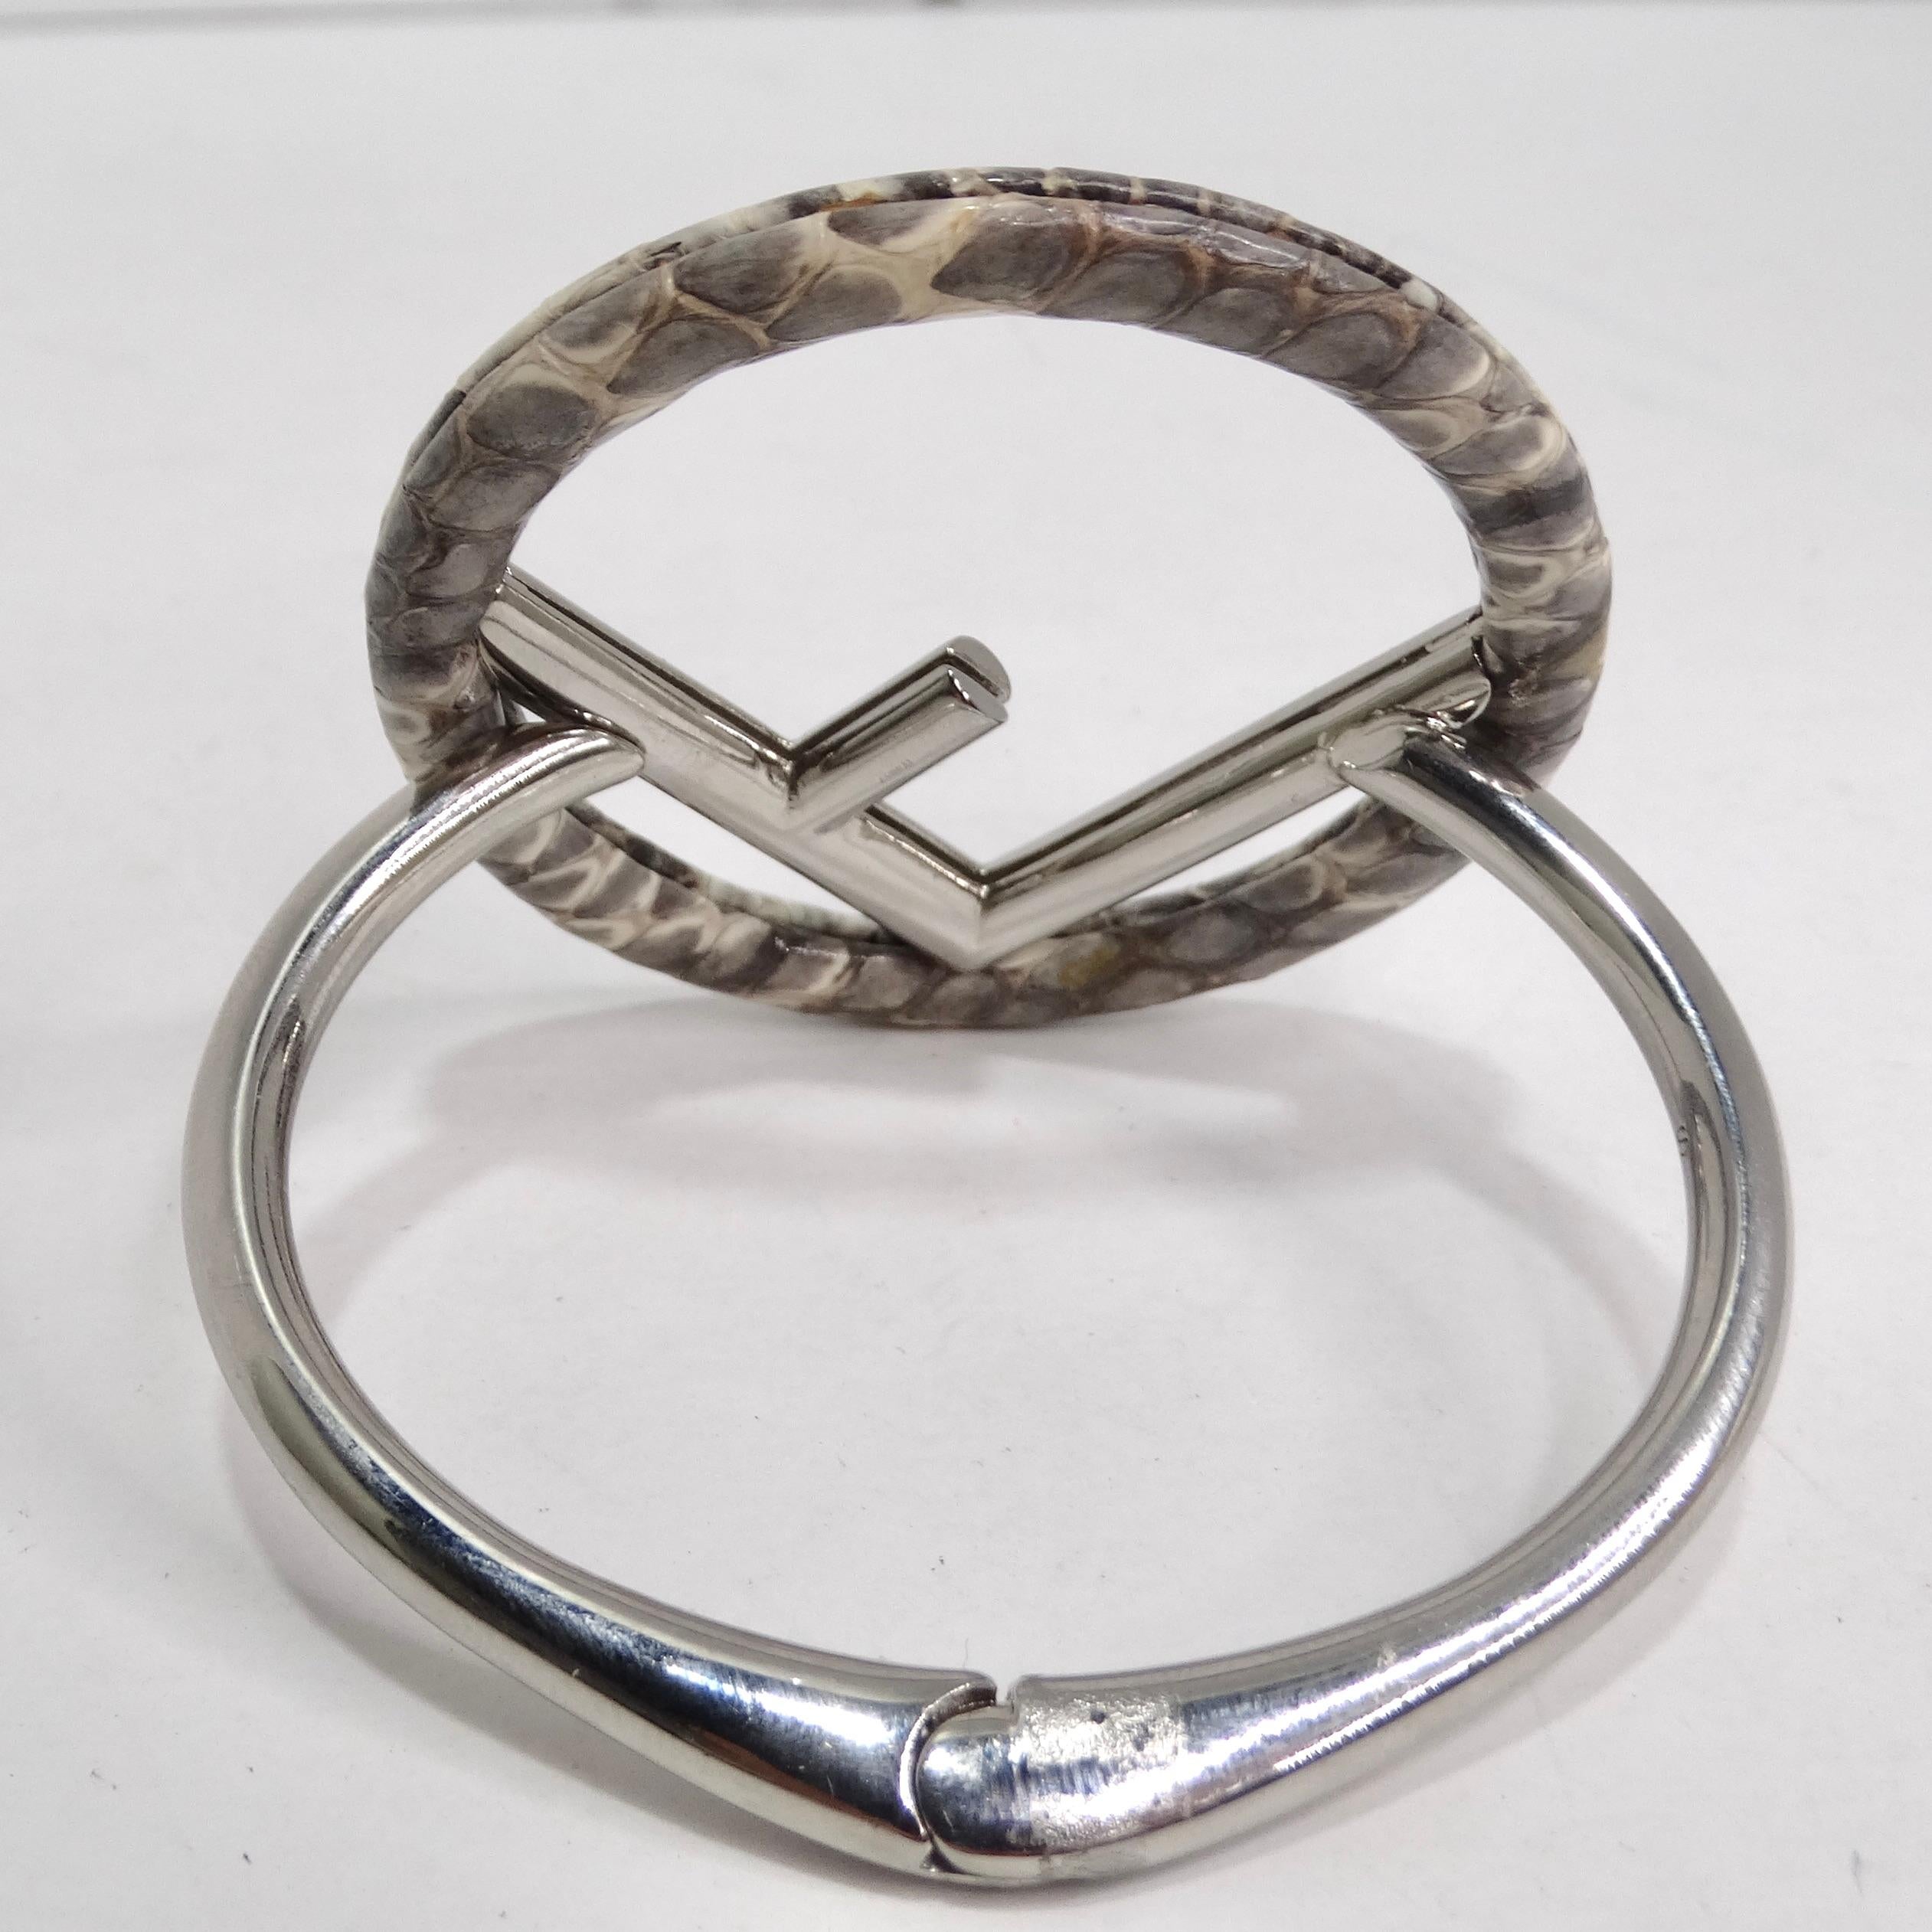 Fendi Snakeskin Silver Tone Bracelet In Excellent Condition For Sale In Scottsdale, AZ